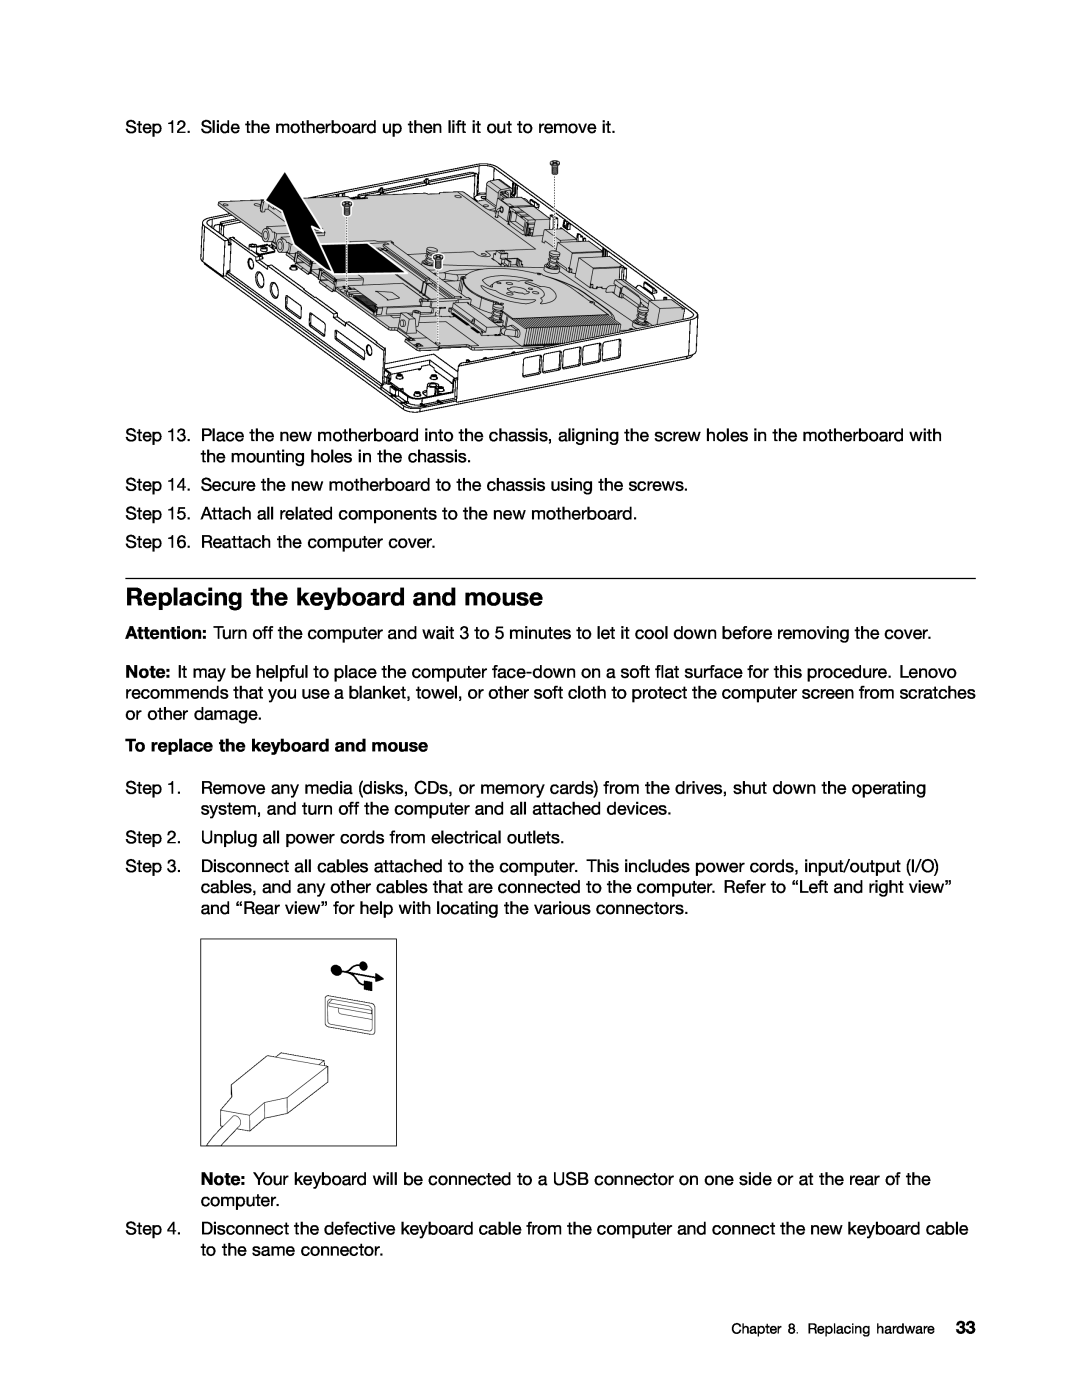 Lenovo Q180 manual Replacing the keyboard and mouse, To replace the keyboard and mouse 